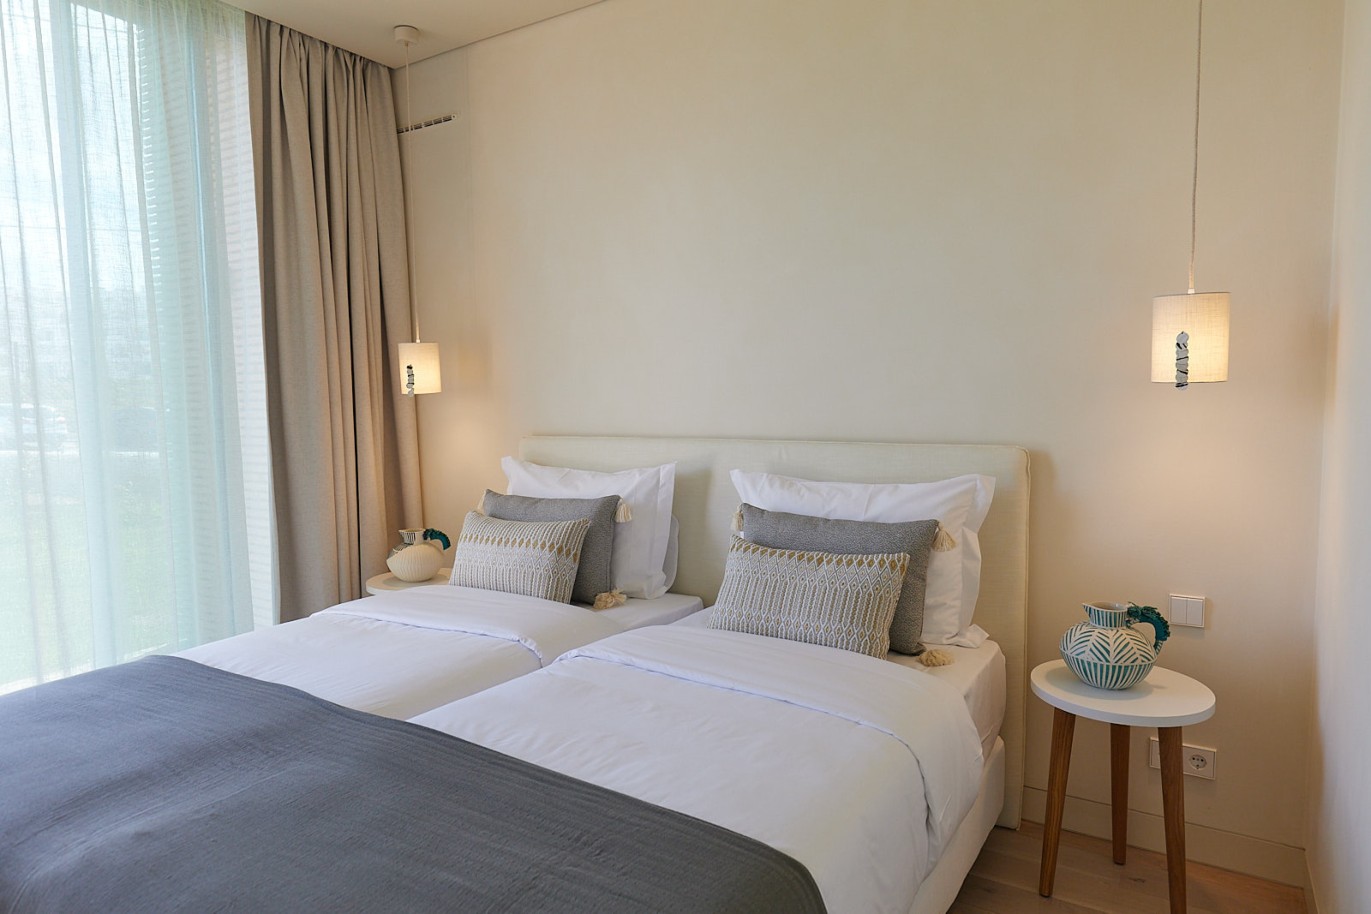 2 bedroom apartment in resort, for sale in Porches, Algarve_230777